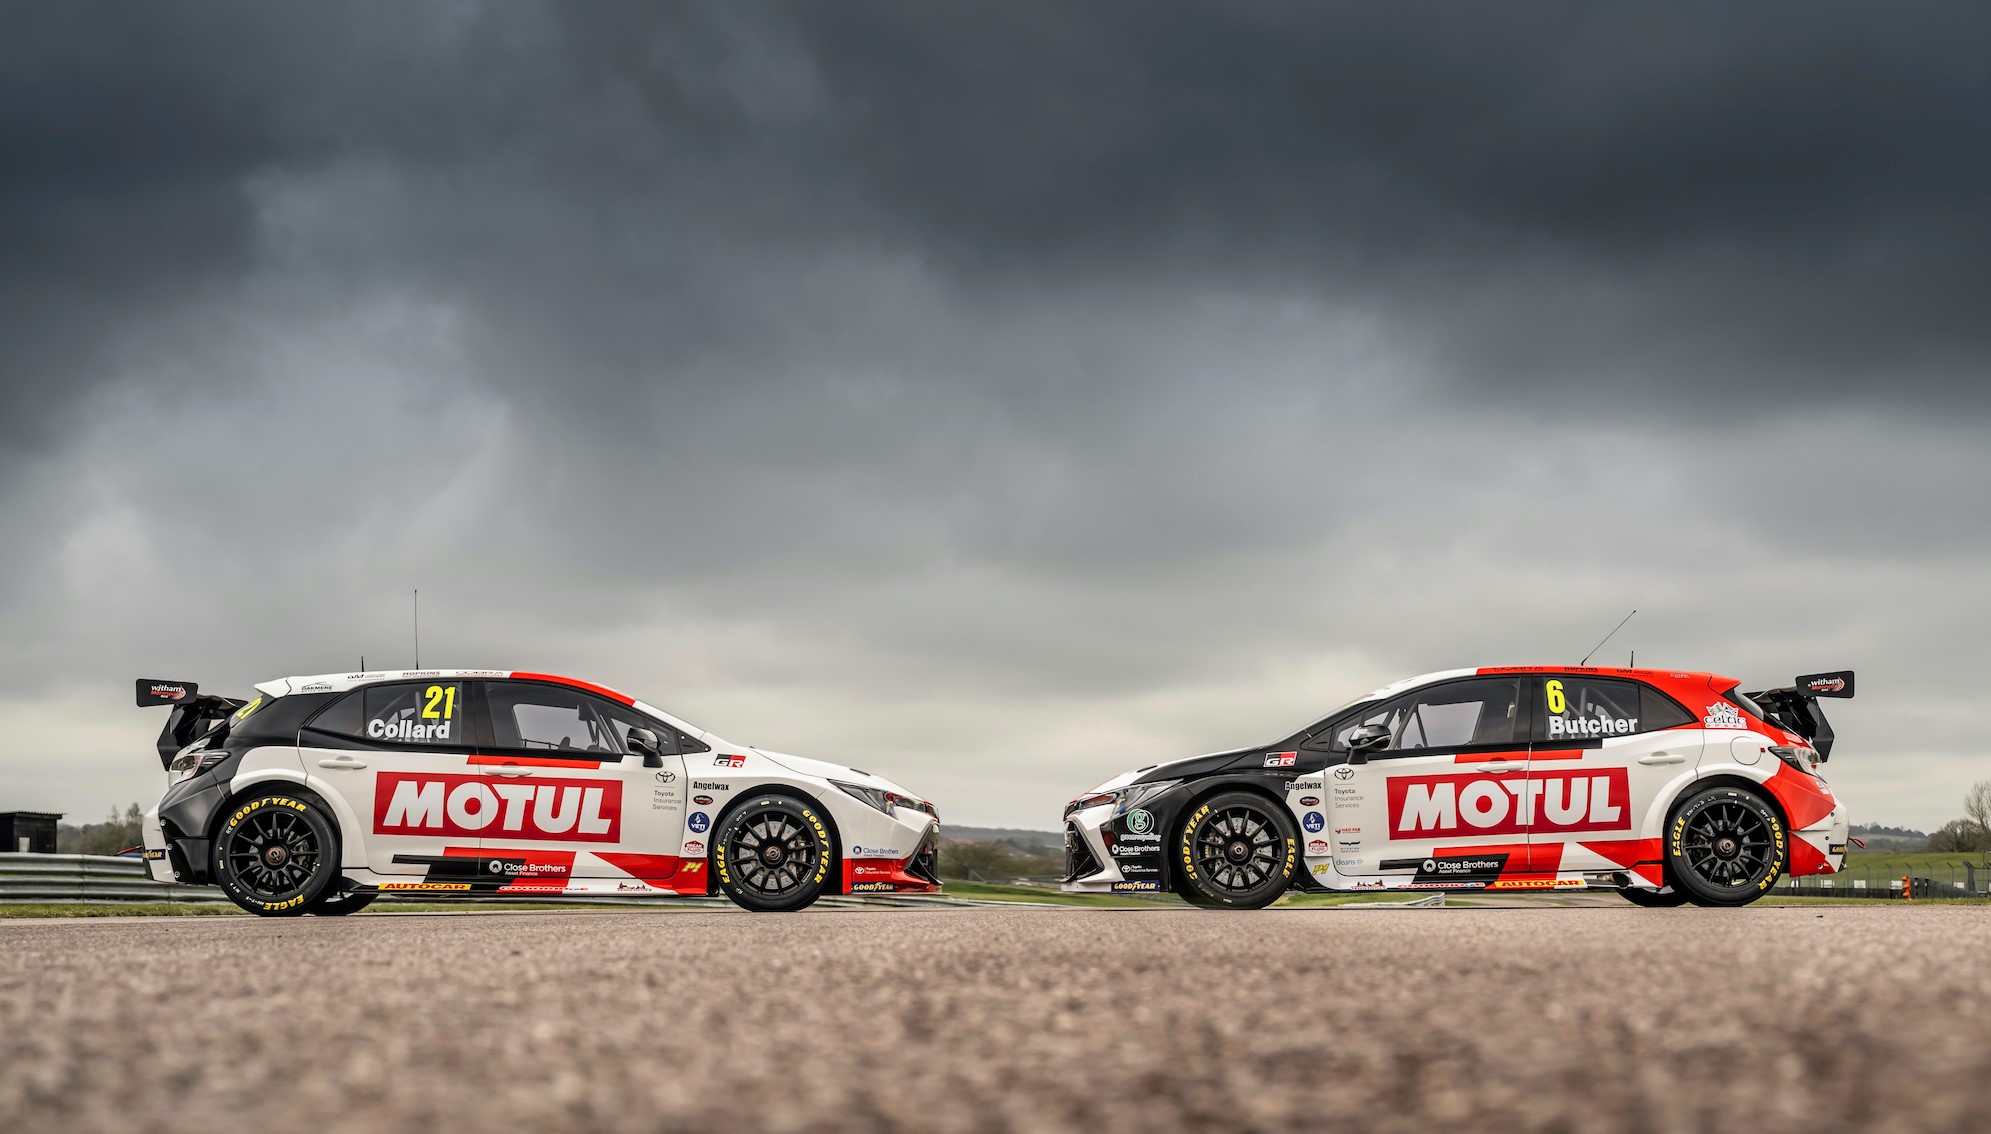 Motul, Toyota Gazoo Racing UK target BTCC success in 2022